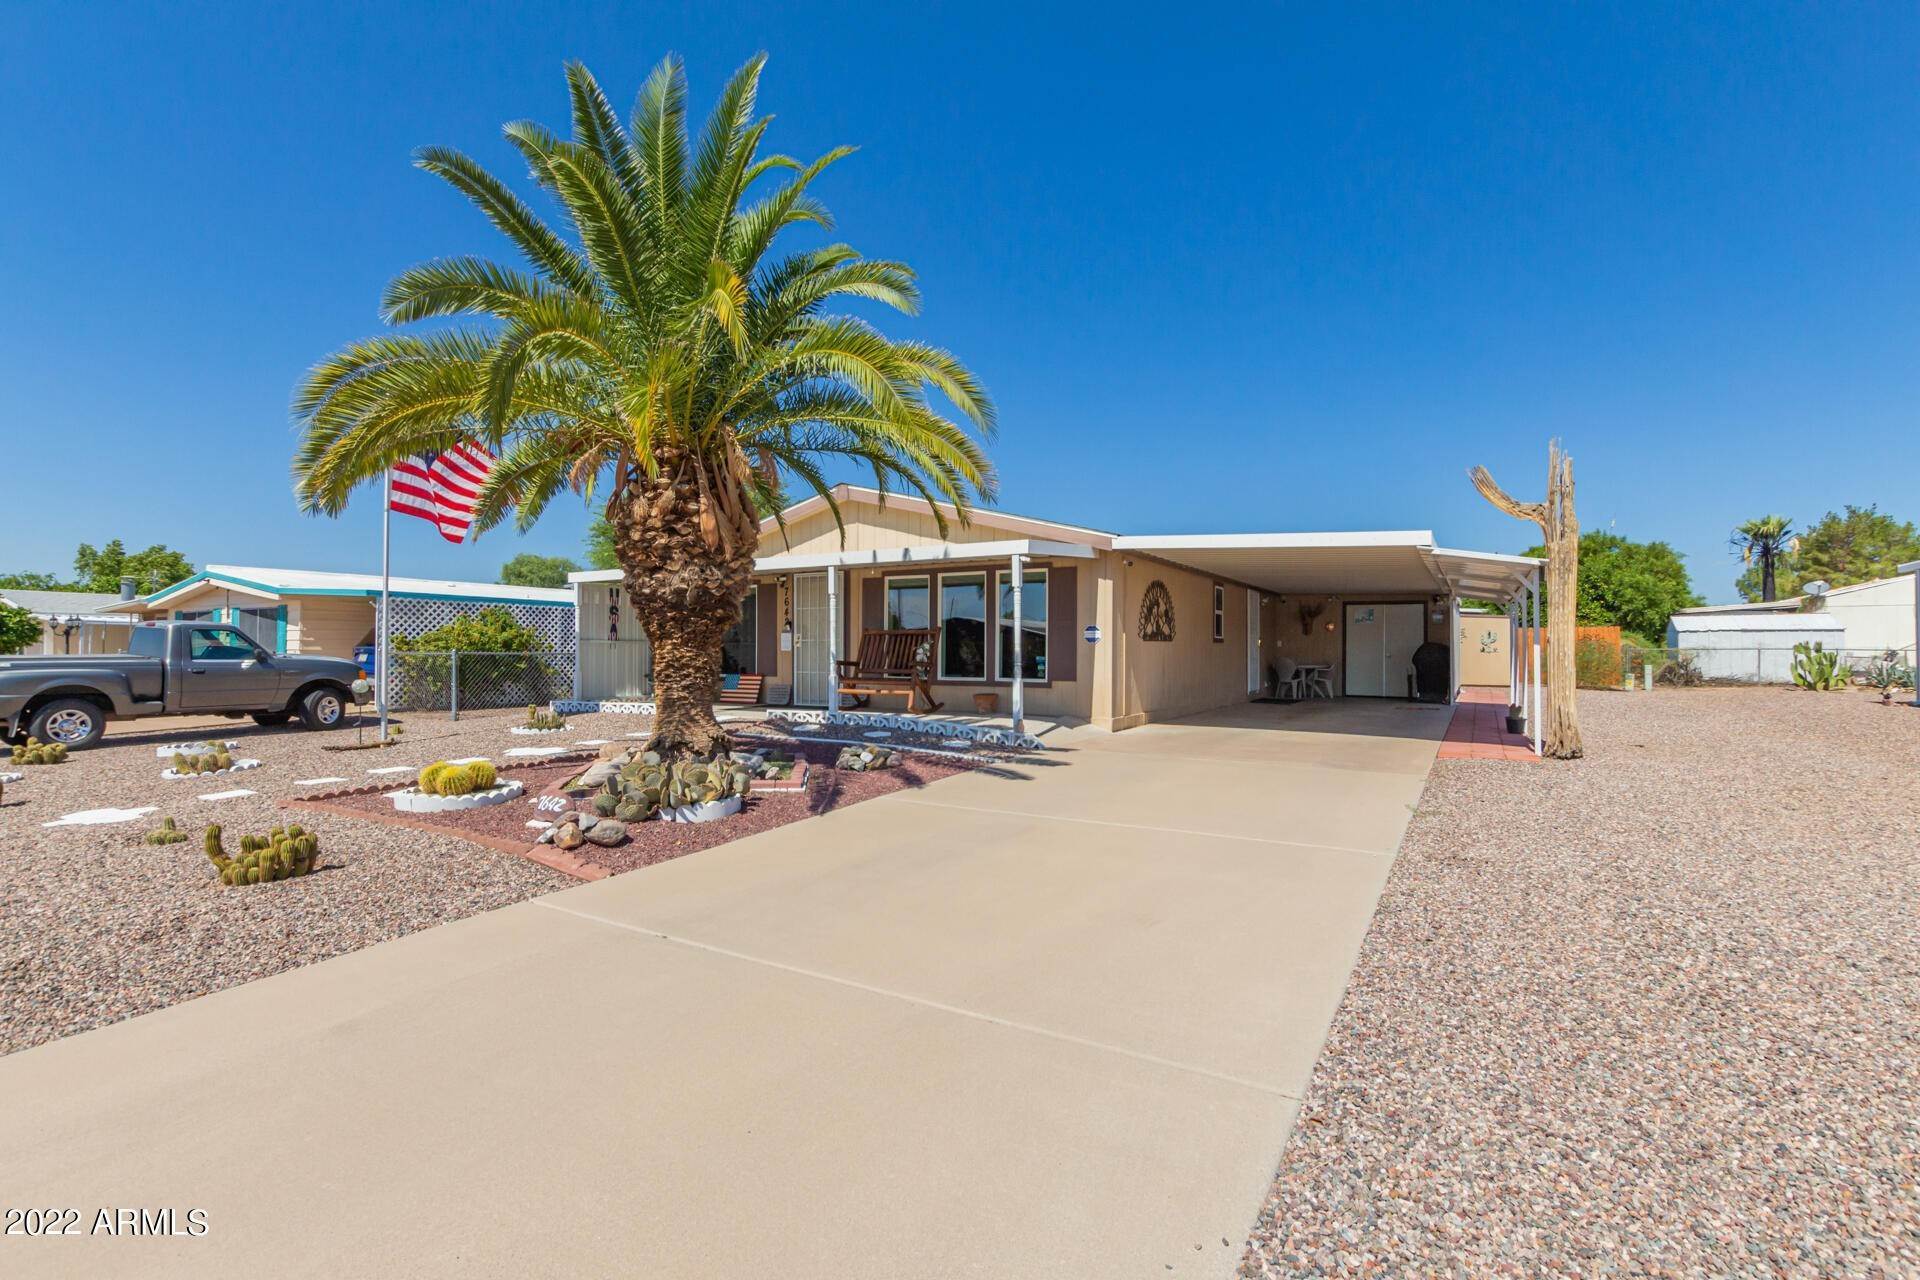 4. Mobile Home for Sale at Mesa, AZ 85209